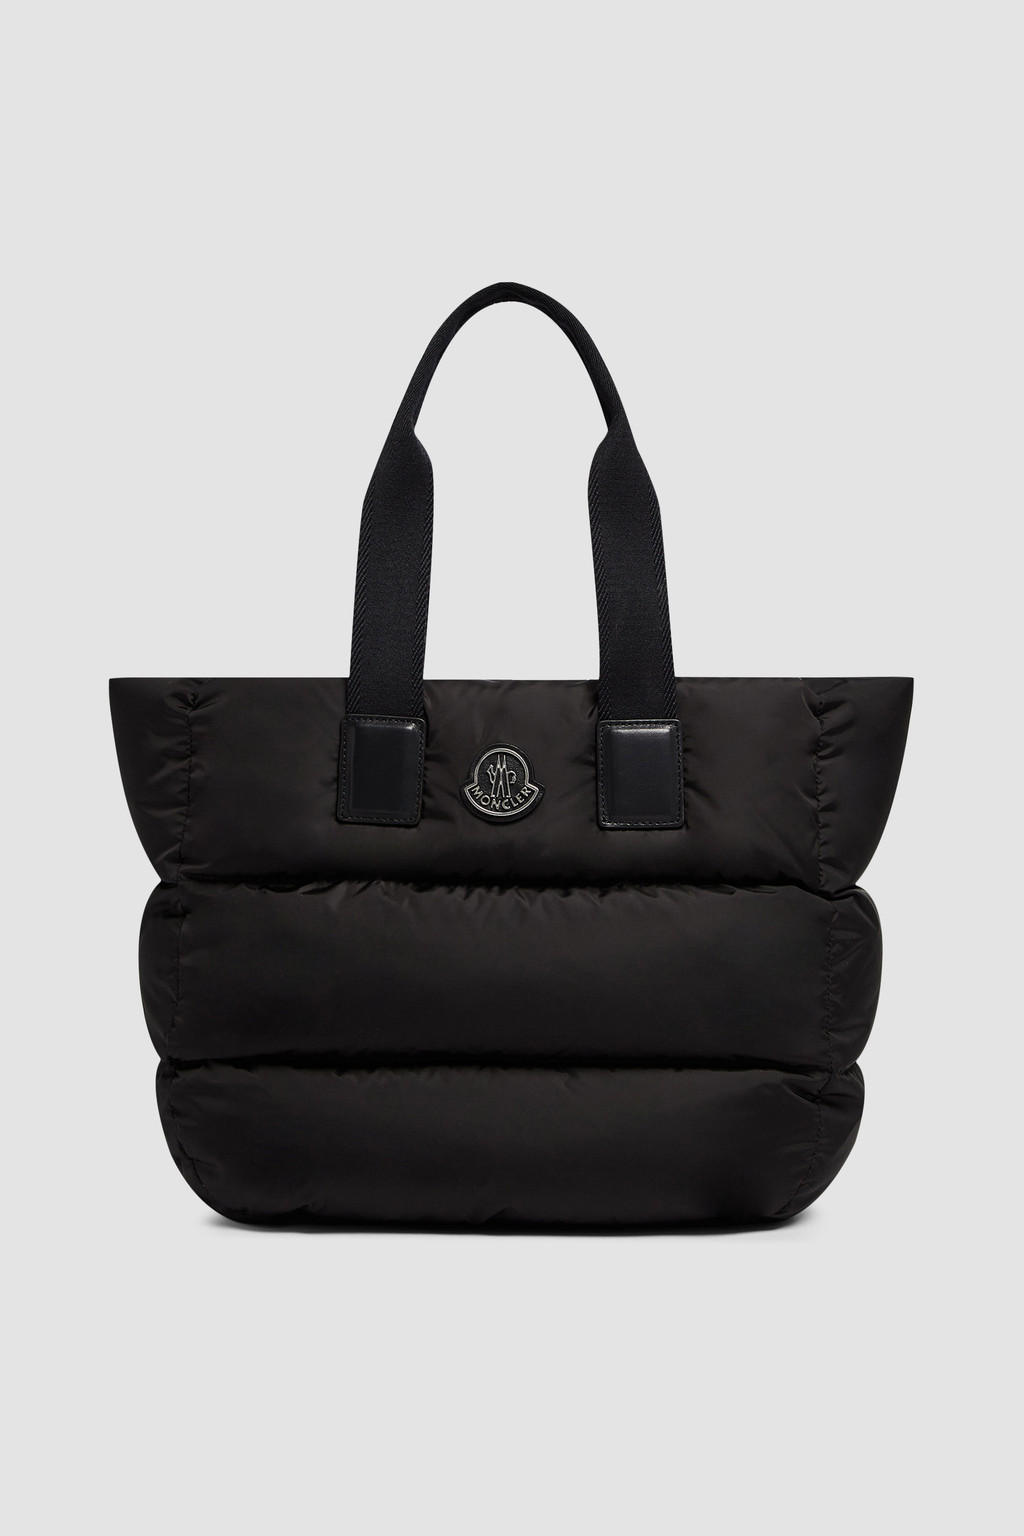 Backpacks, Handbags, Fanny Packs & Suitcases for Women | Moncler